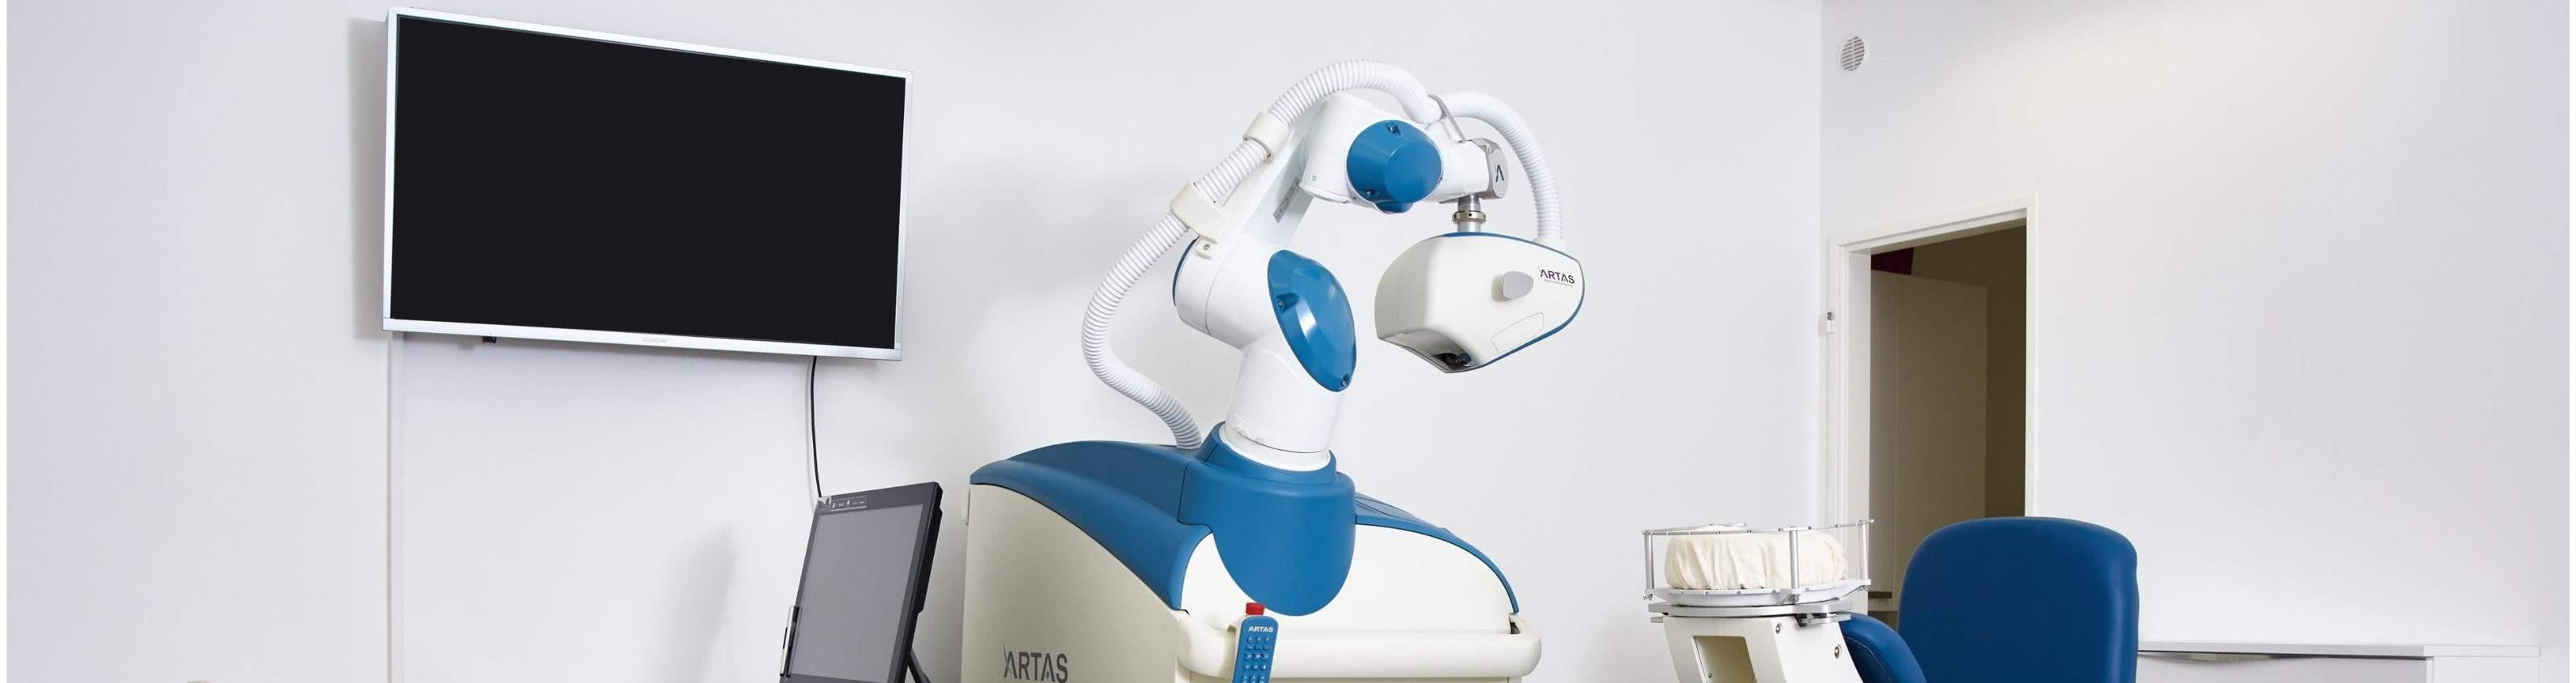 Artas Robotic Technology 2